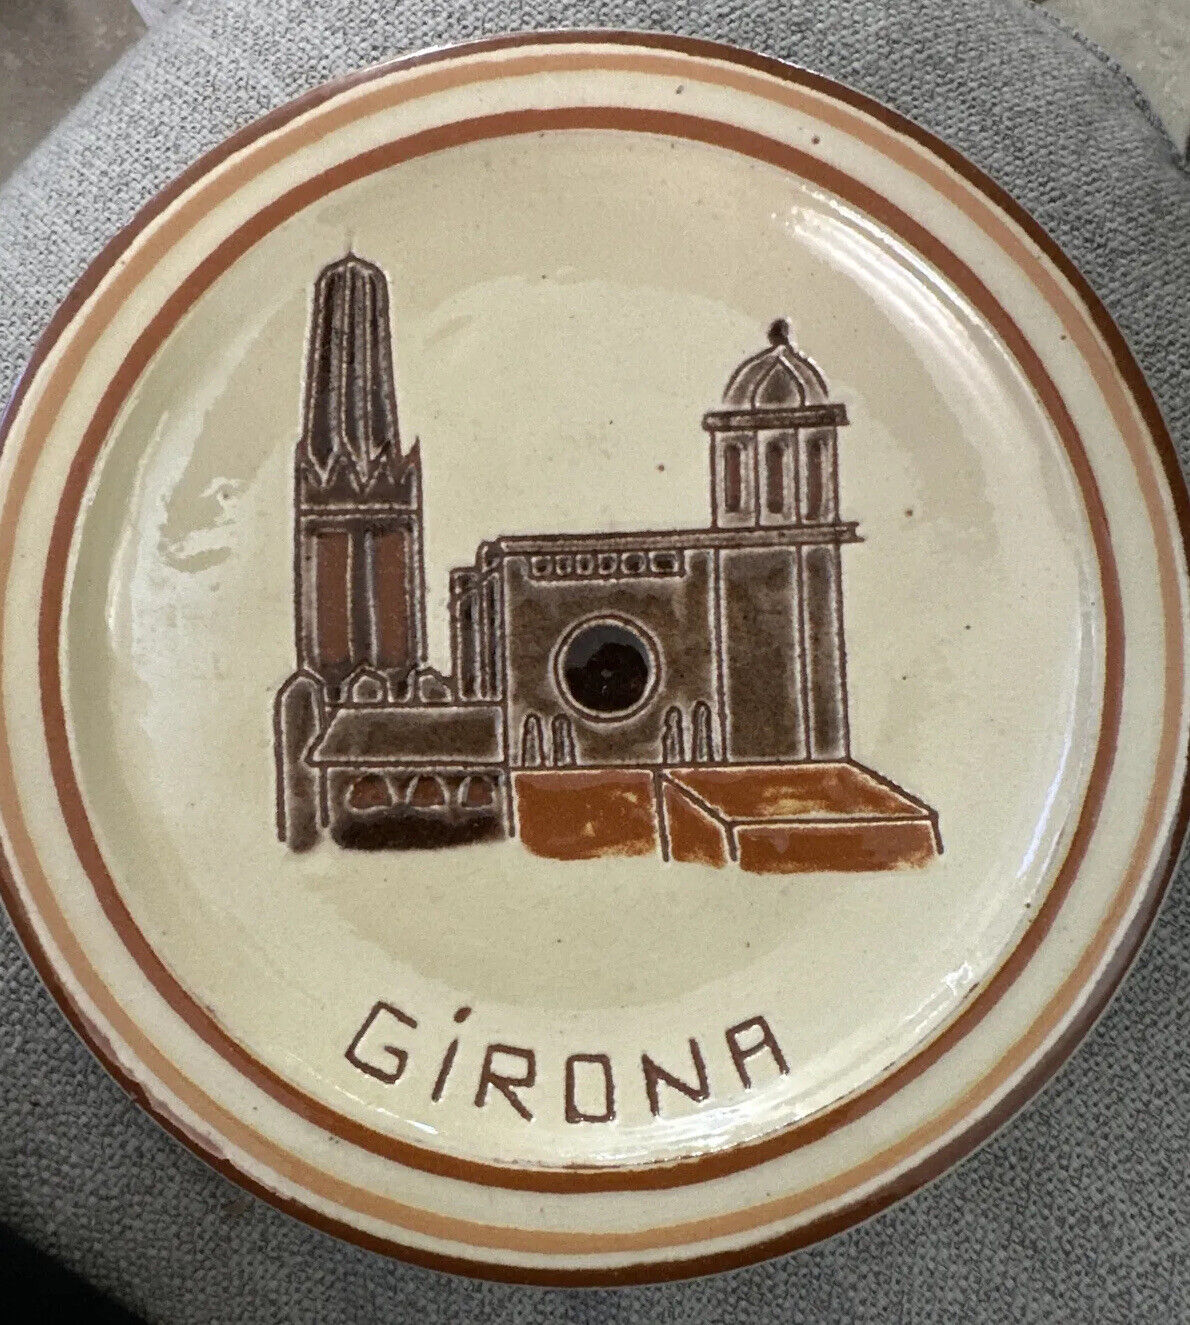 Girona 7.5” Plate Handmade Ceramic Glazed Embossed Vintage 